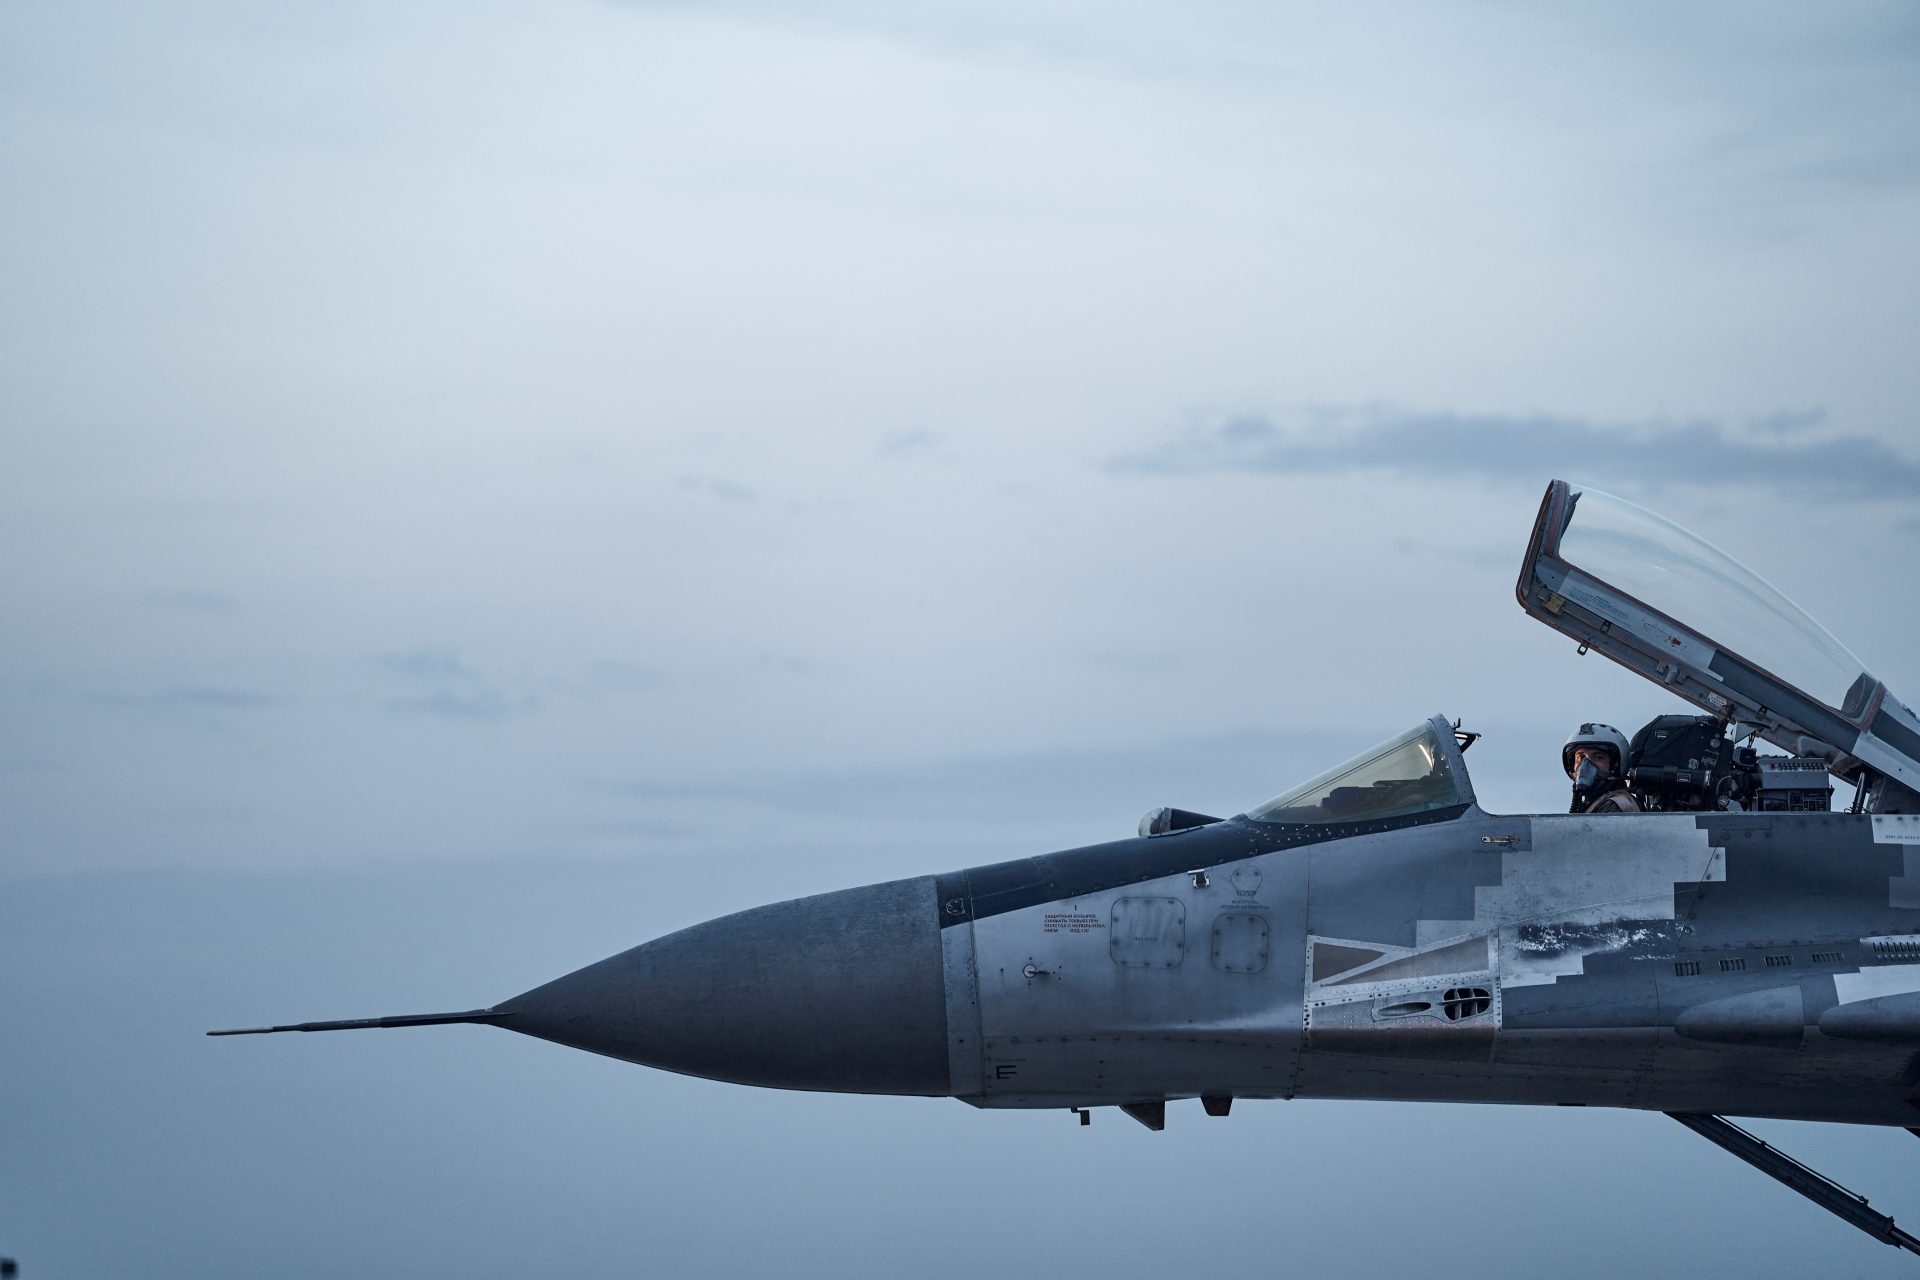 The first US trained Ukrainian F-16 pilots will graduate soon